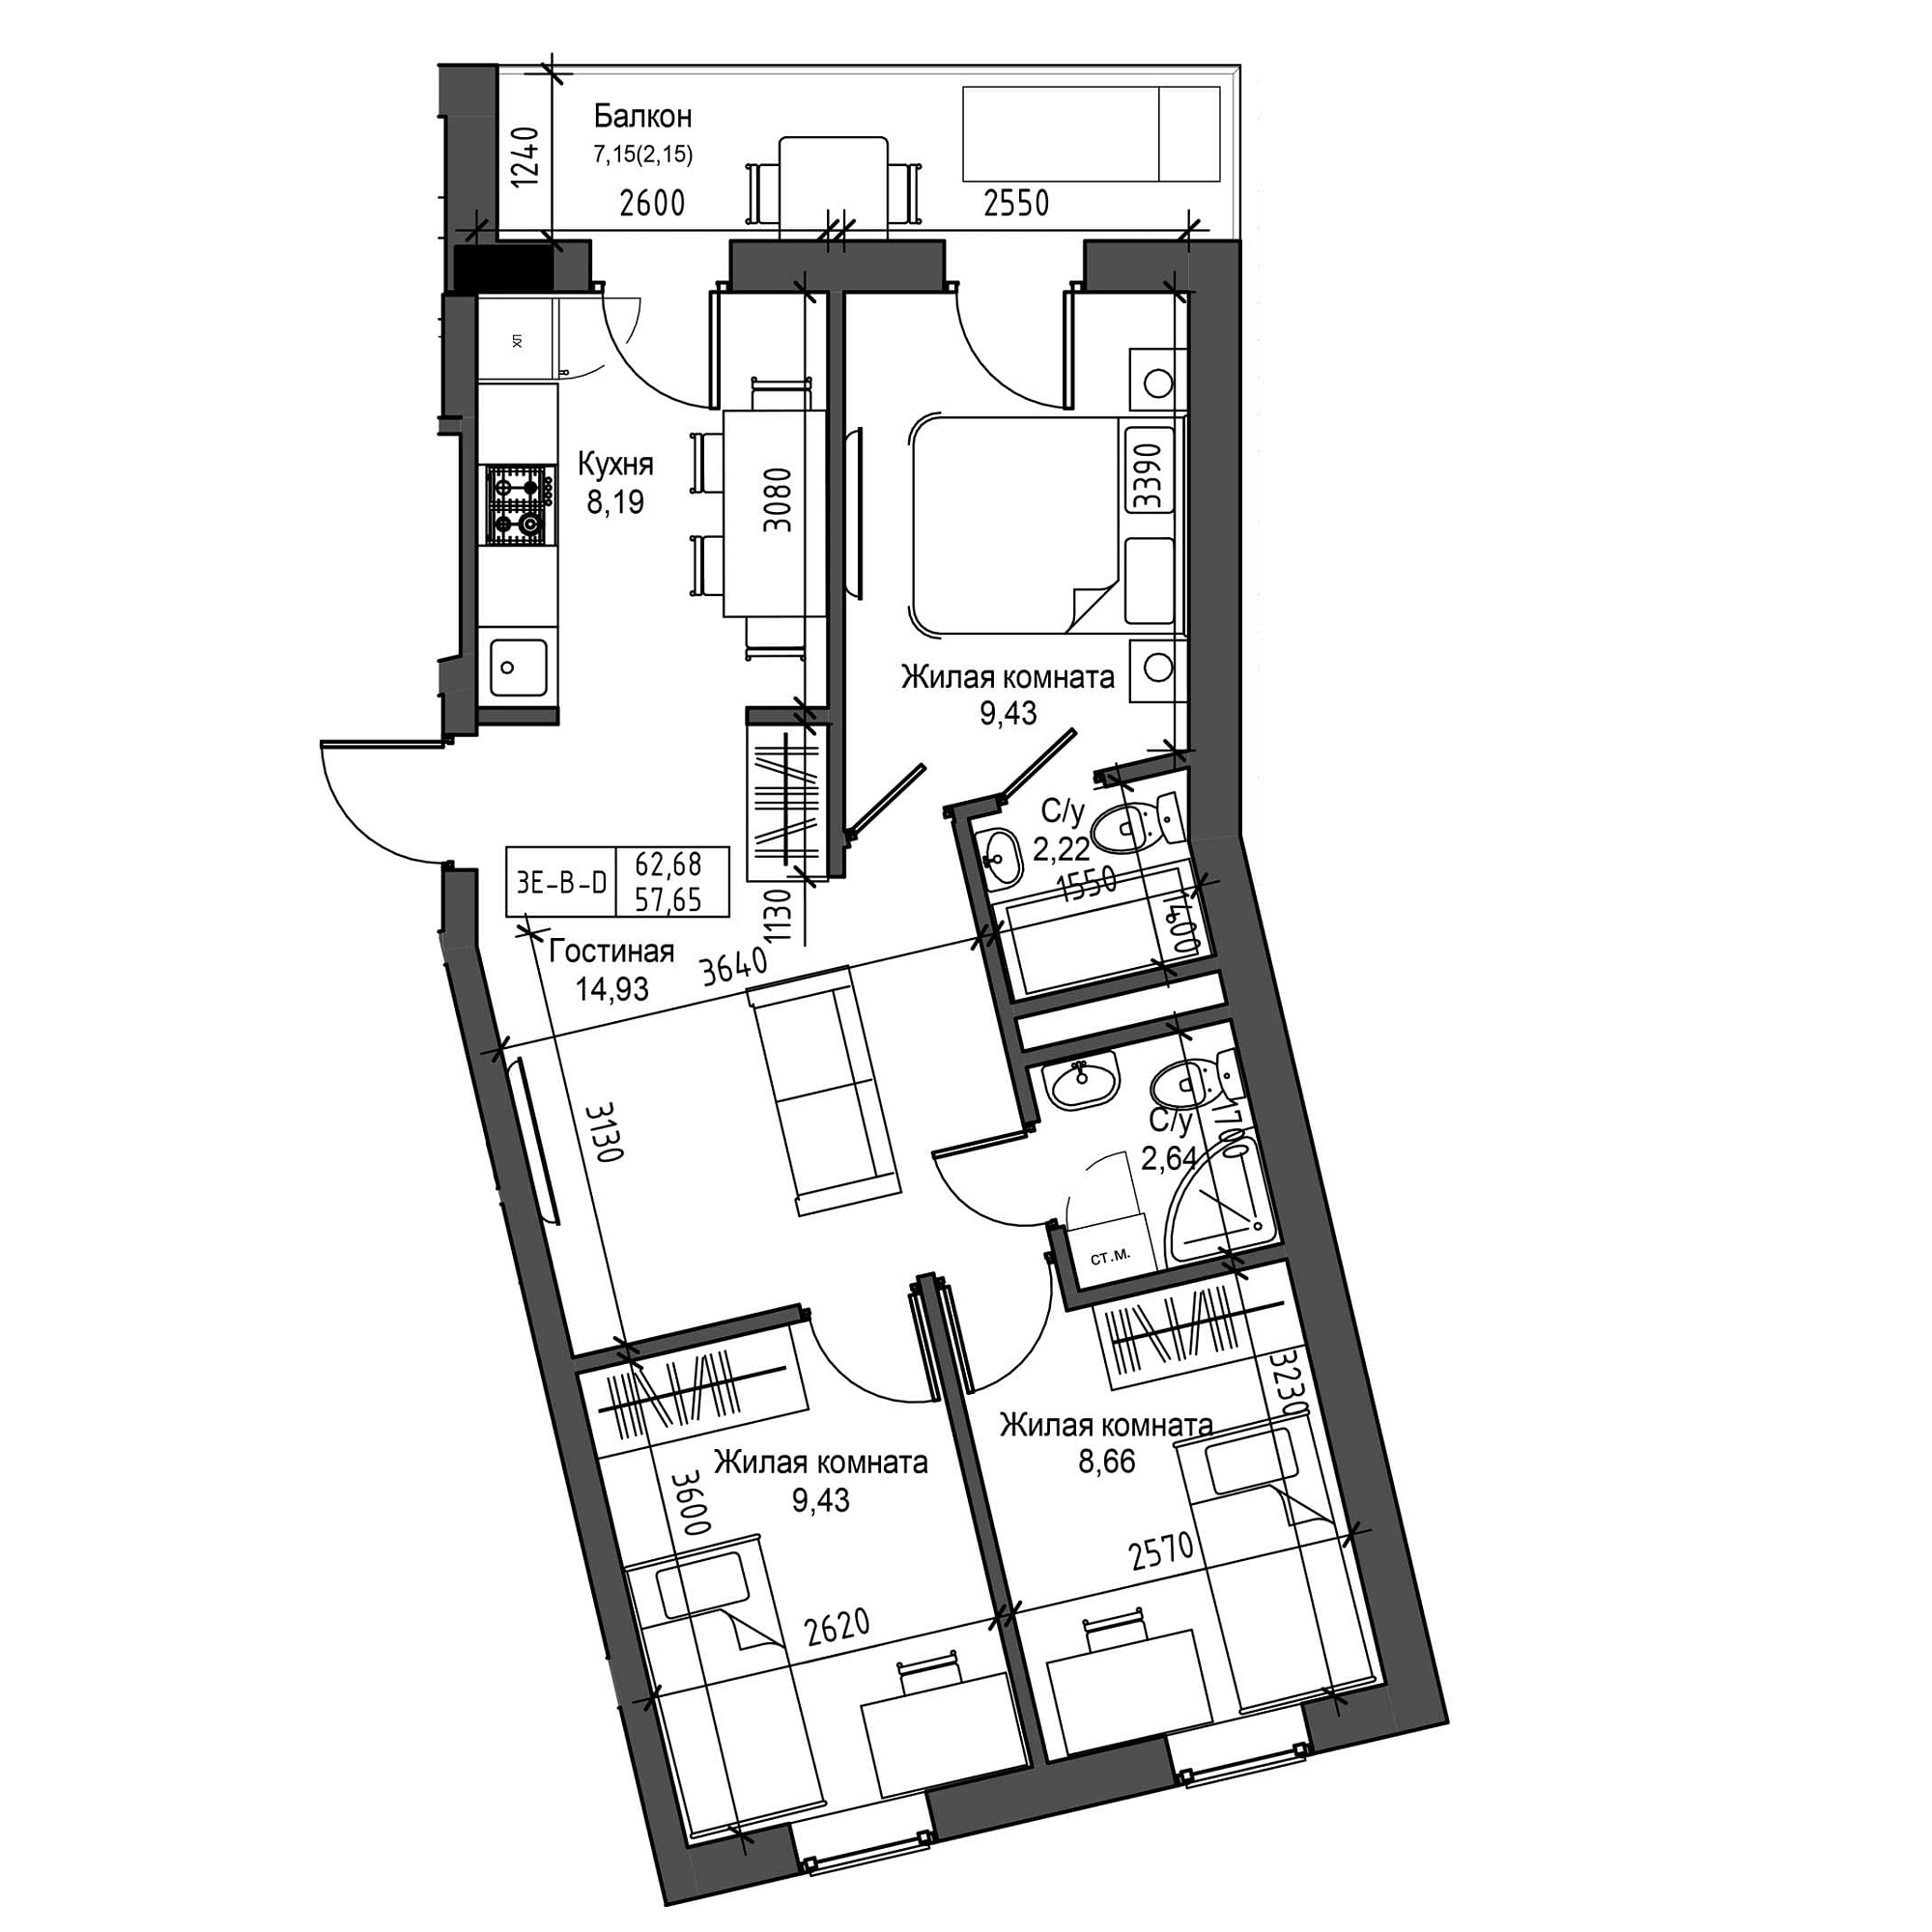 Планування 3-к квартира площею 57.65м2, UM-001-05/0006.